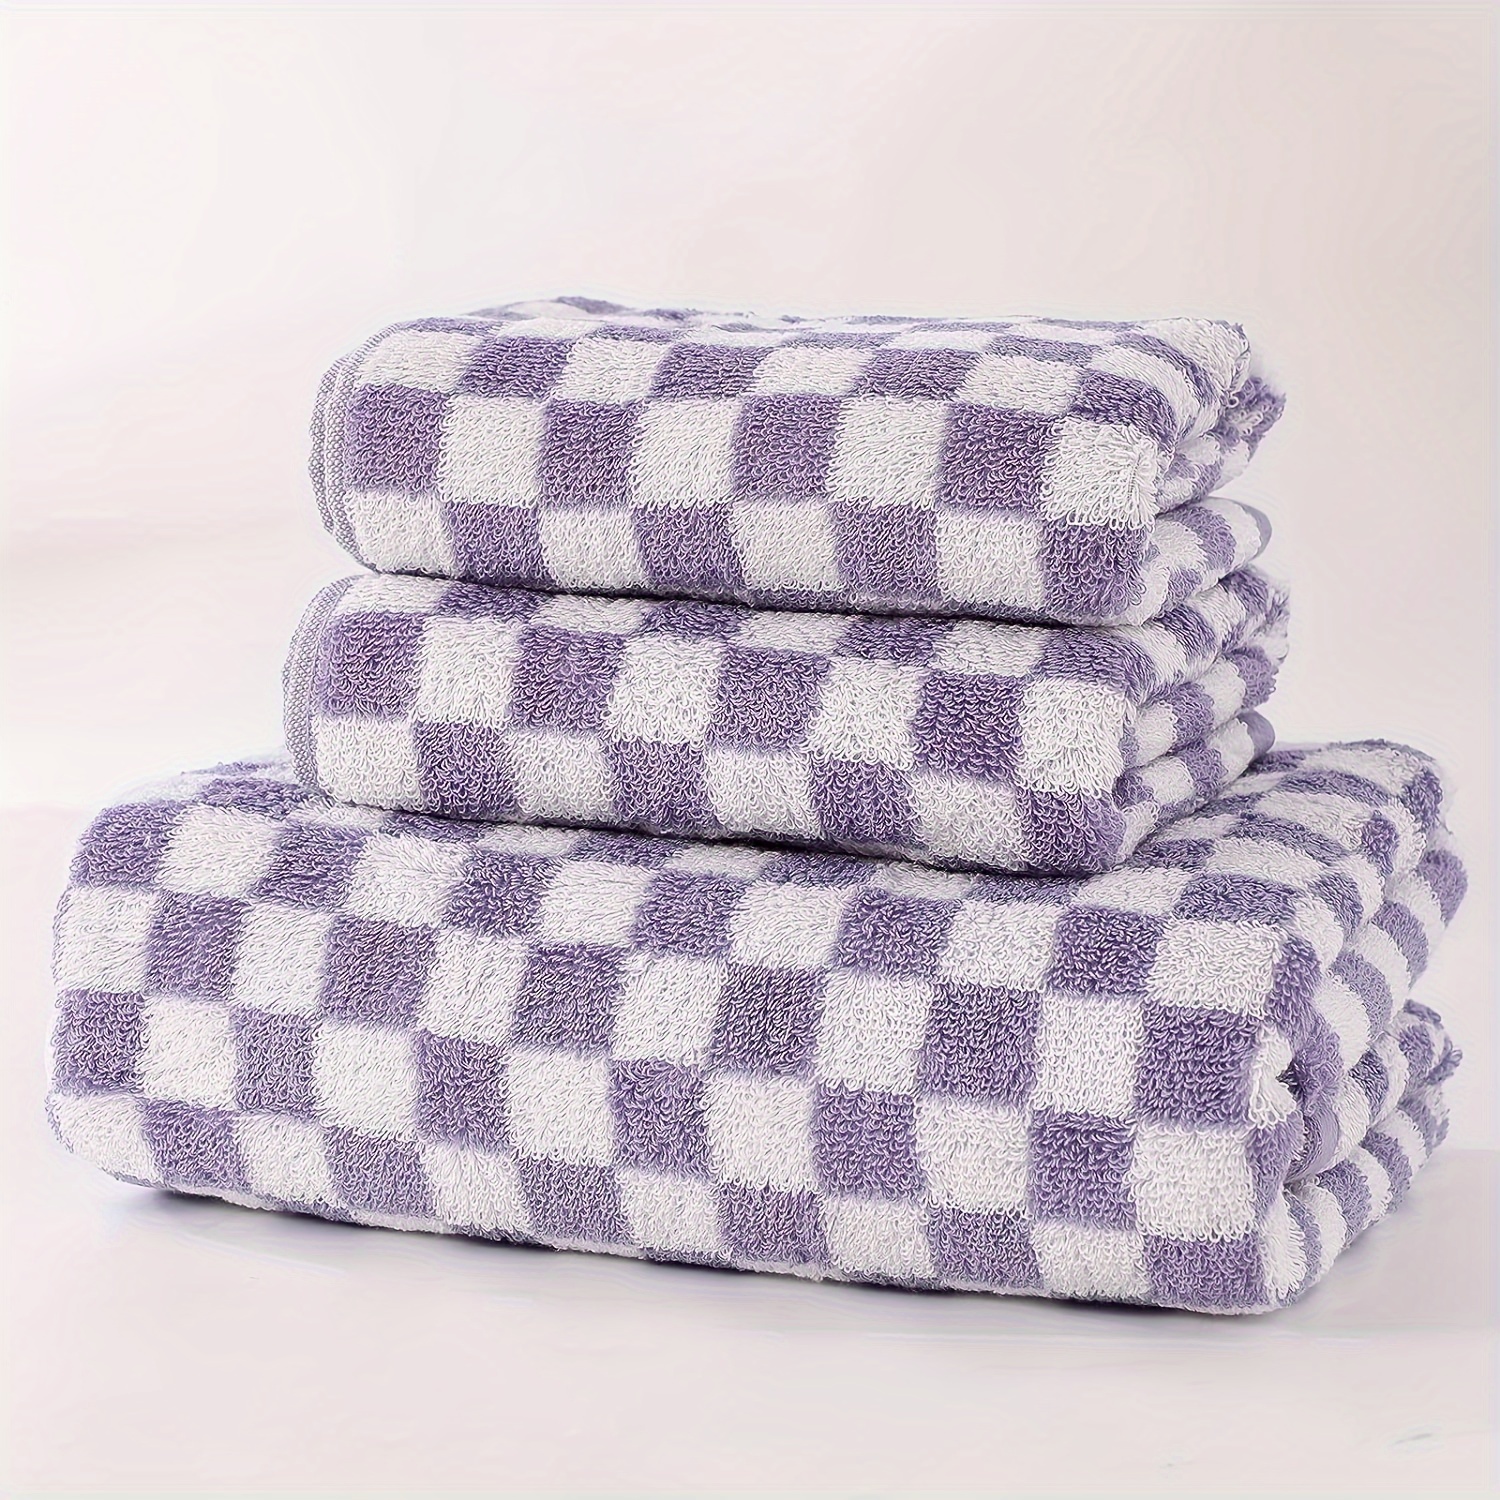  Checkered Hand Towels Minimalist Checkerboard